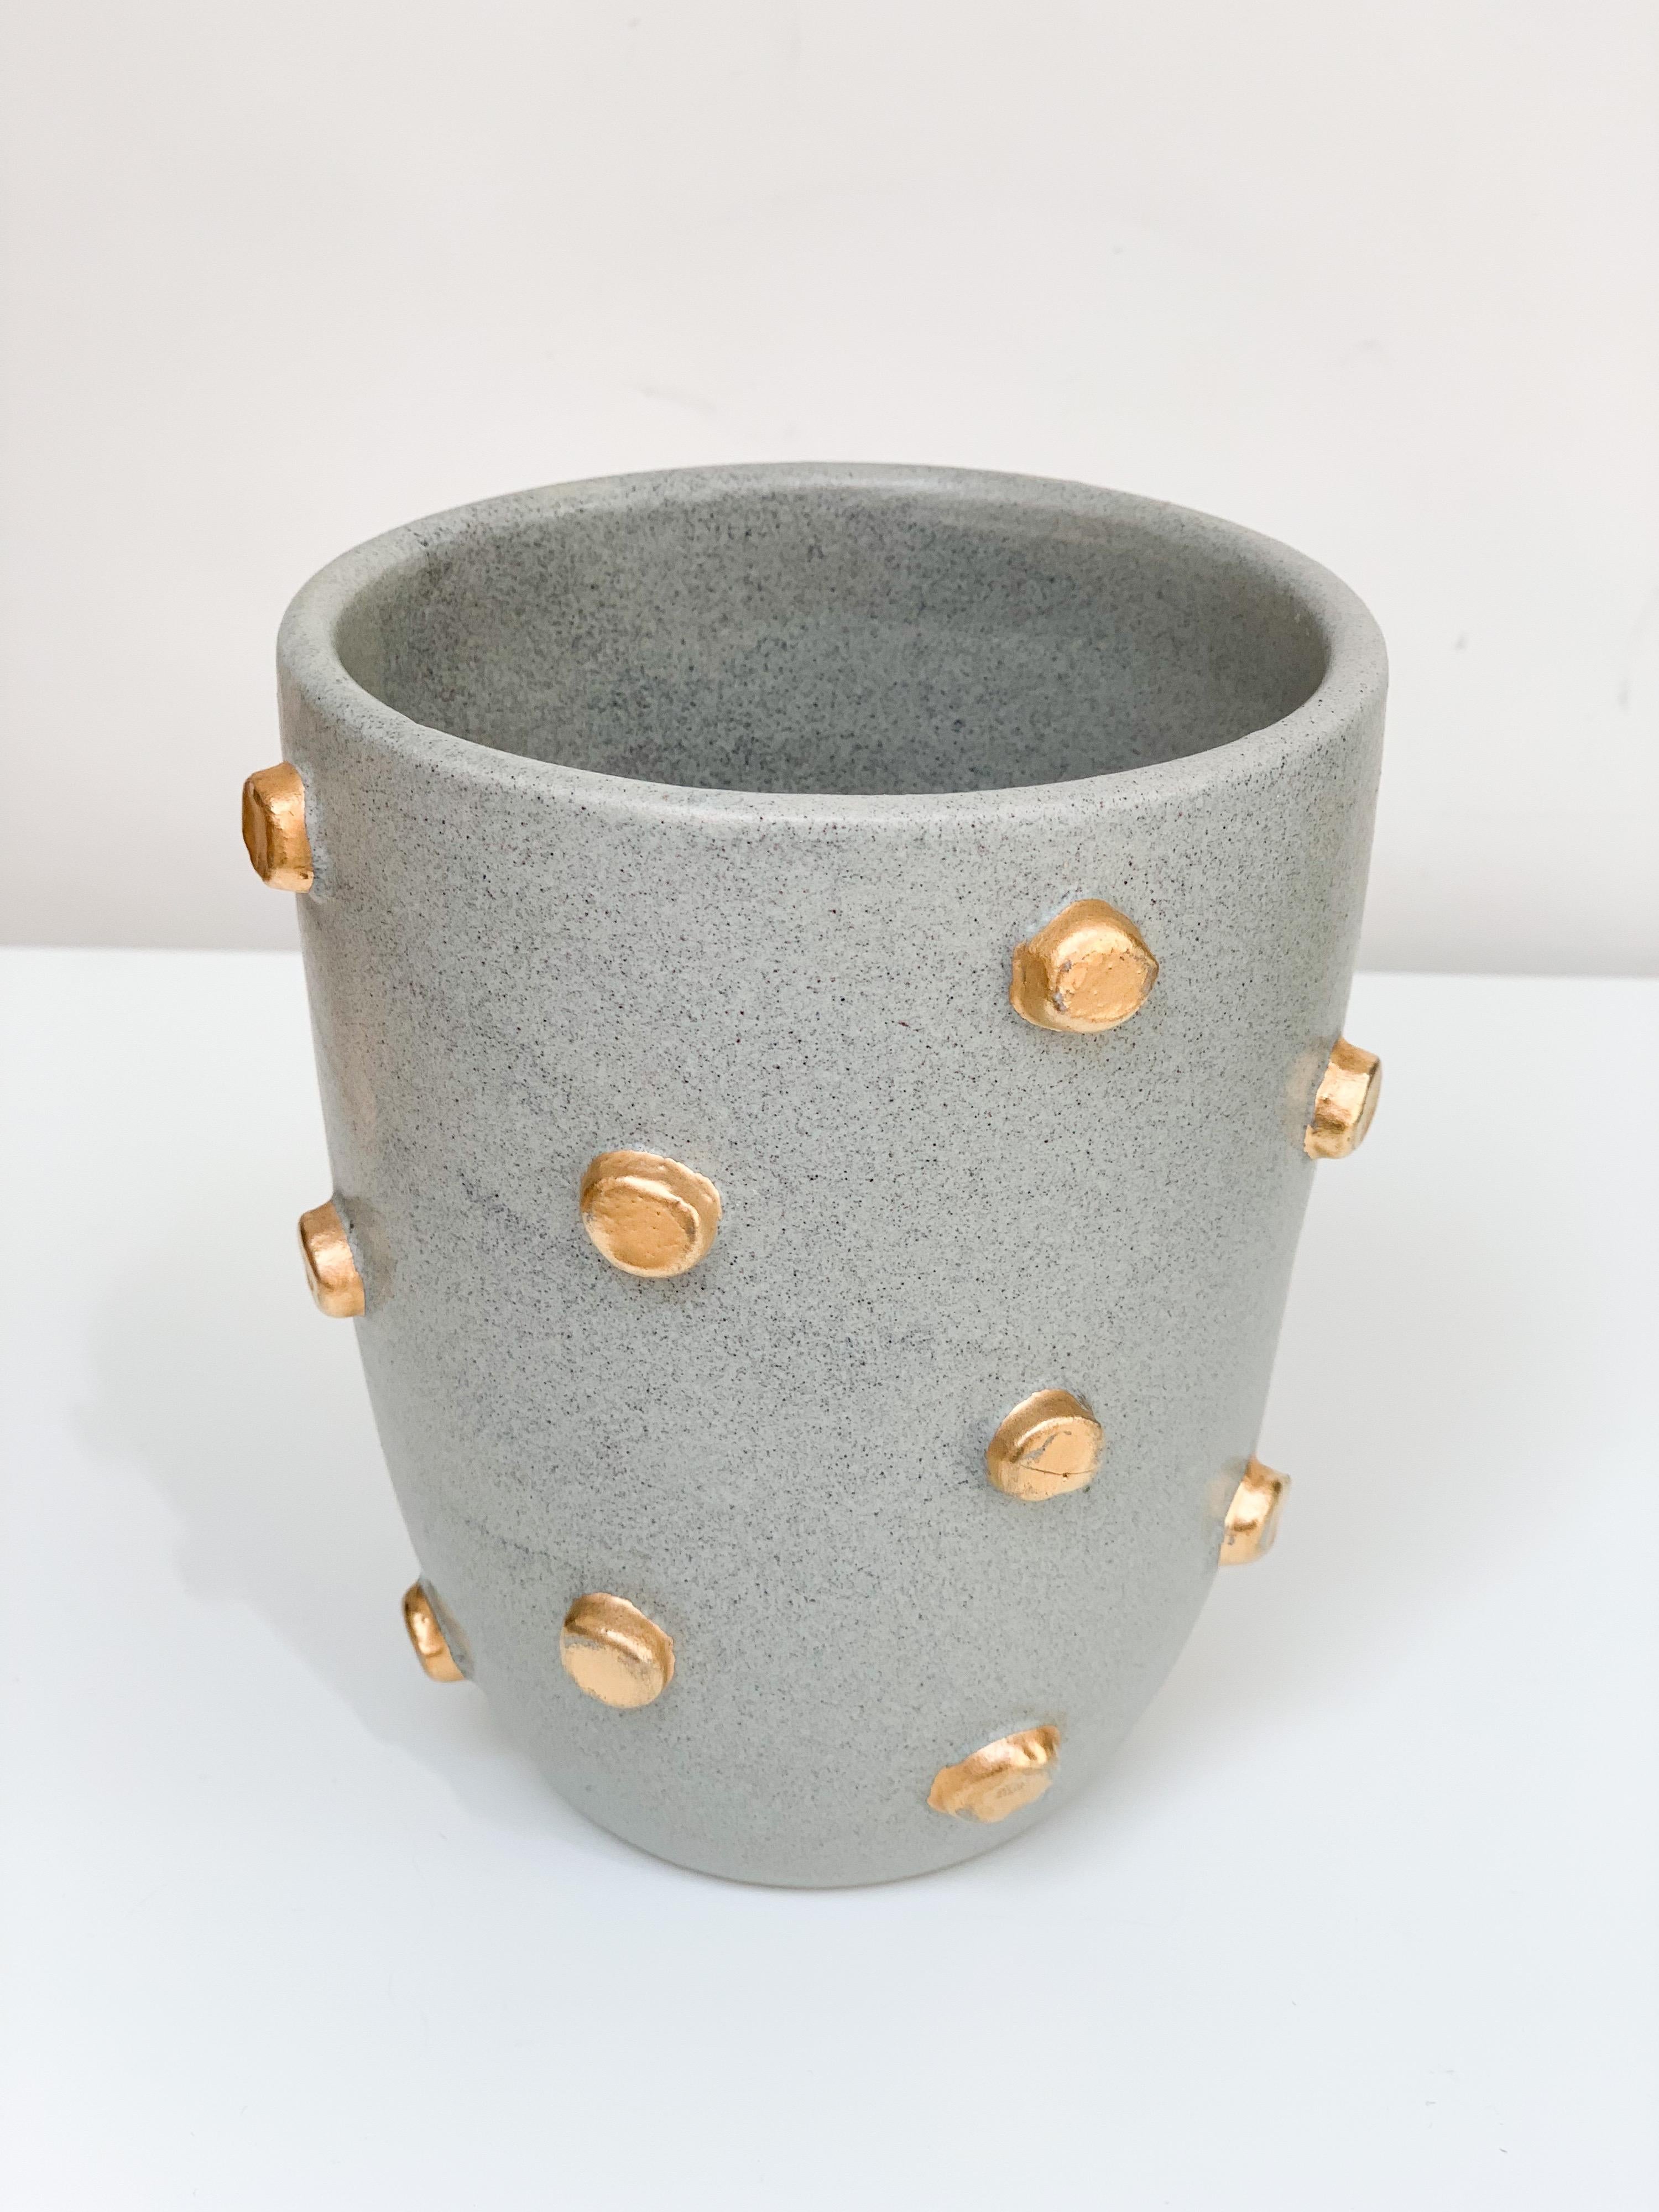 Glazed Bitossi Vase, Ceramic, Gray and Gold Hobnails, Signed